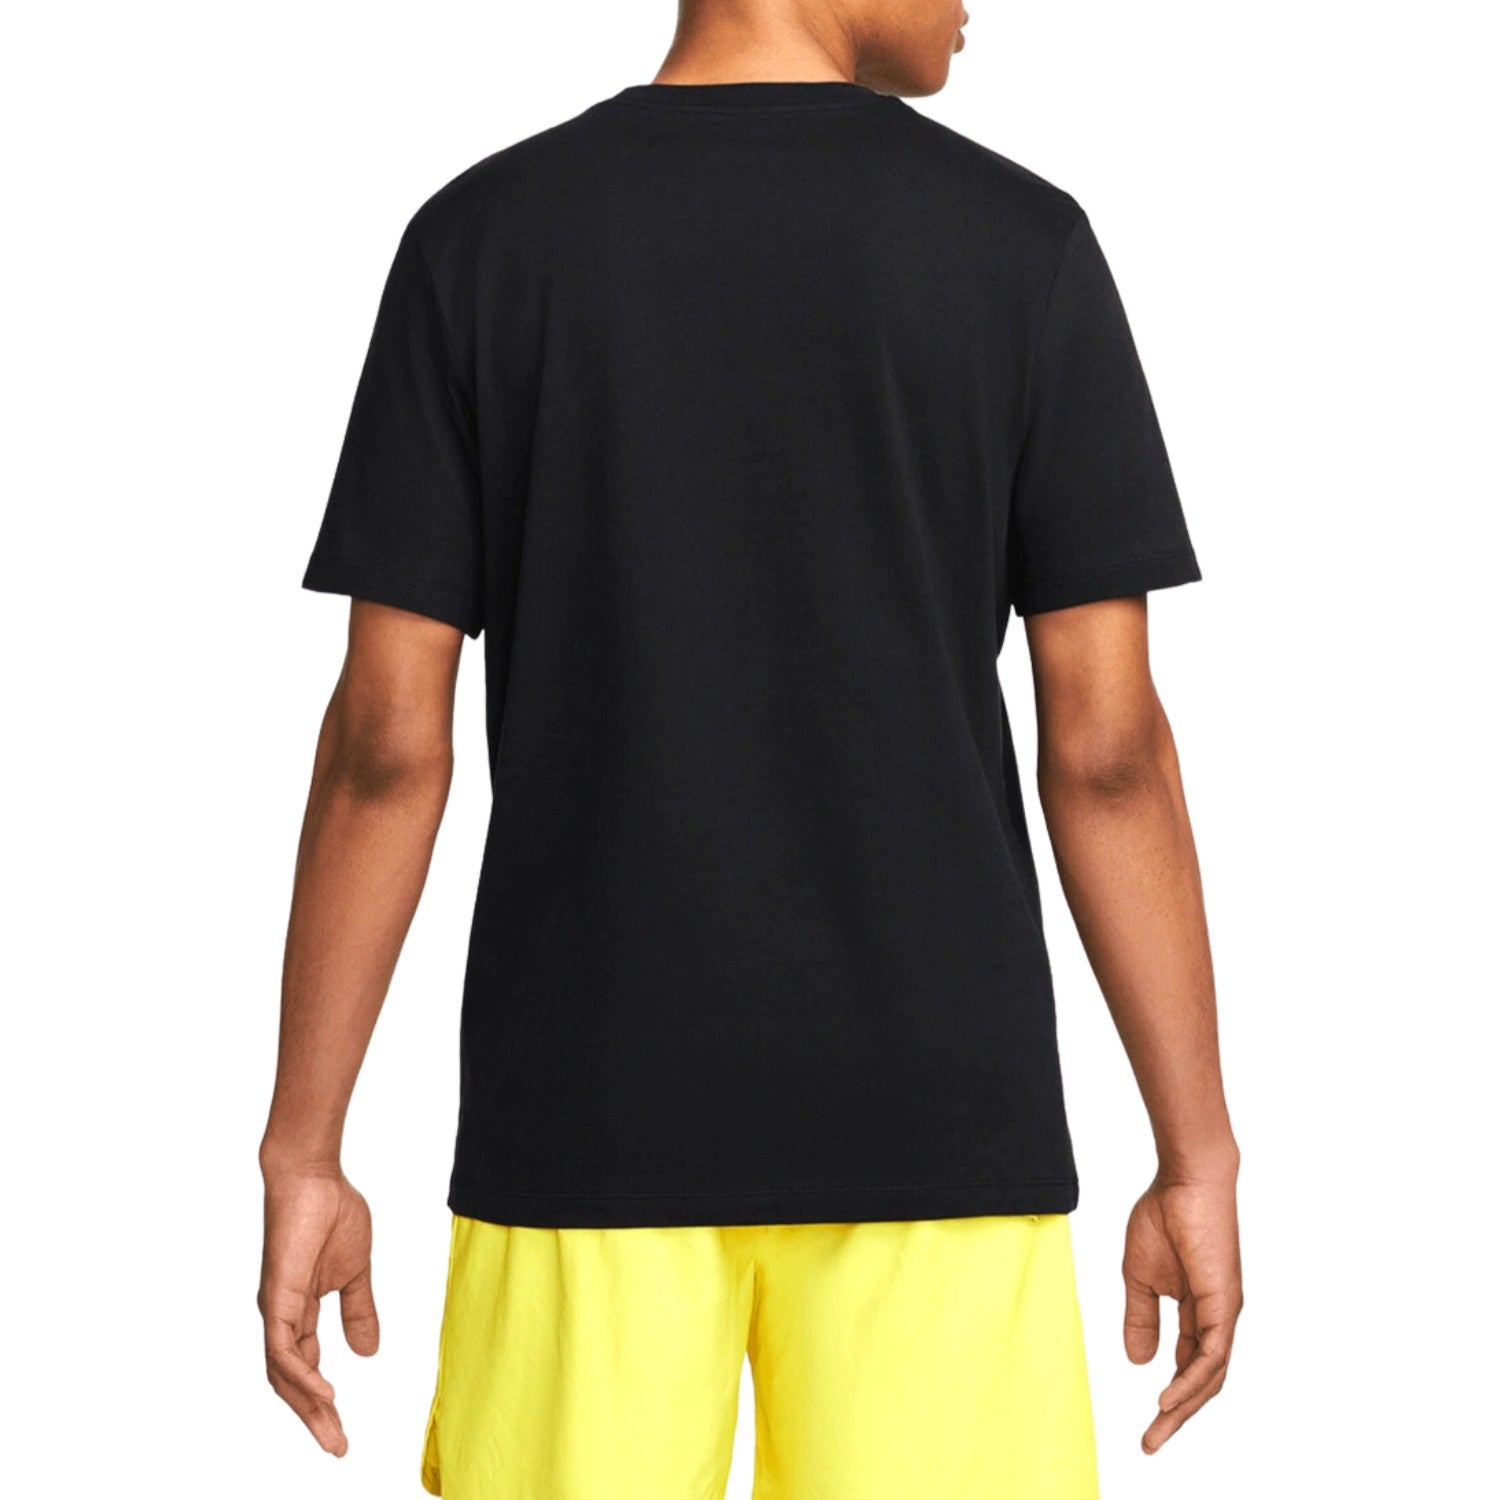 Nike Sportswear T-shirt Mens Style : Fb9796